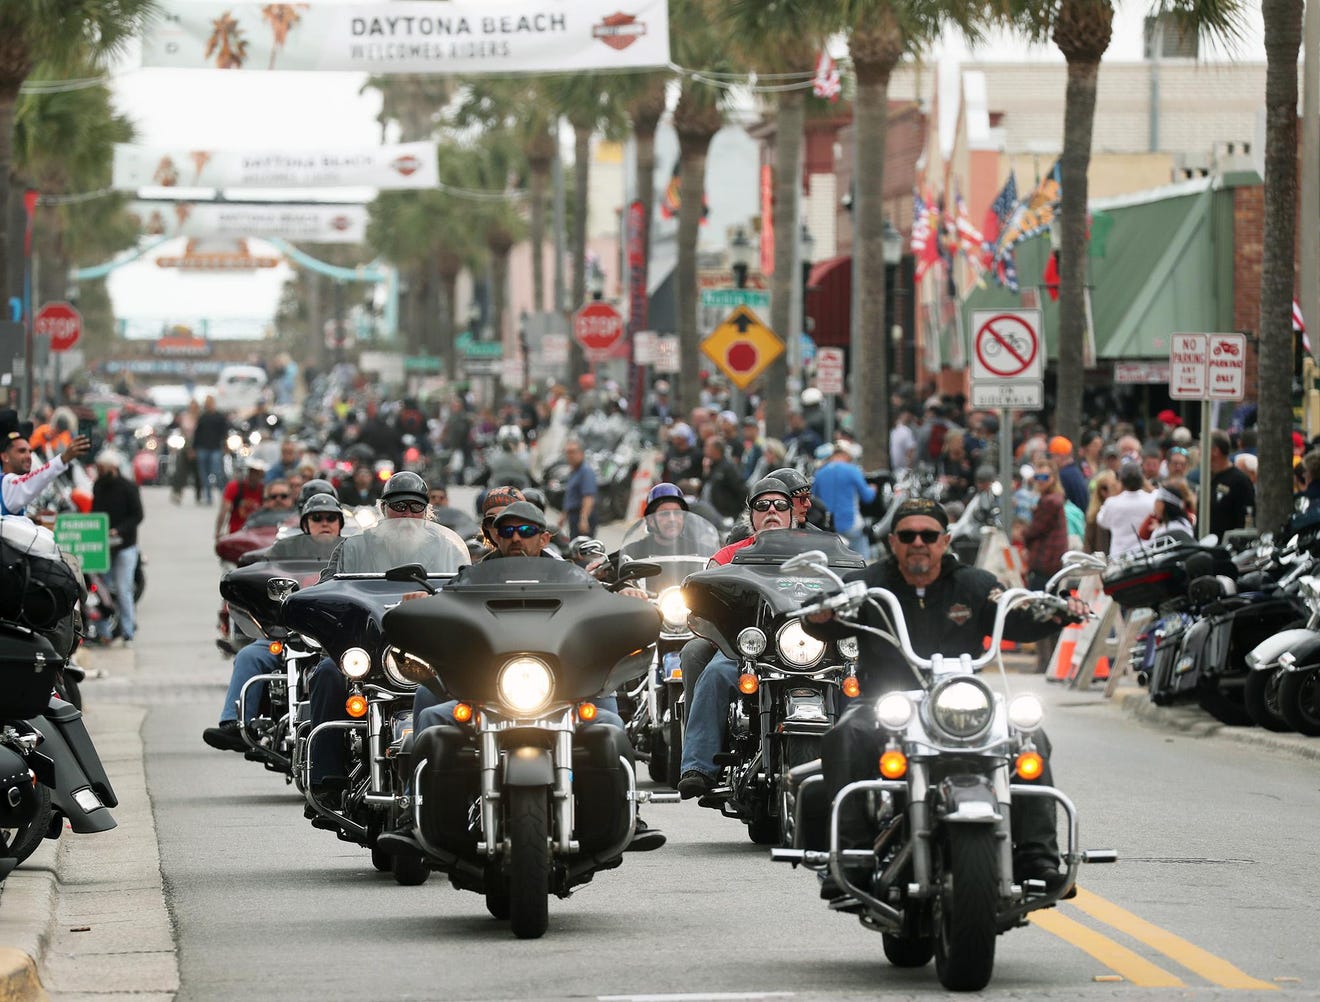 Daytona Beach Bike Week gets OK for full outdoor party, vendors, bands